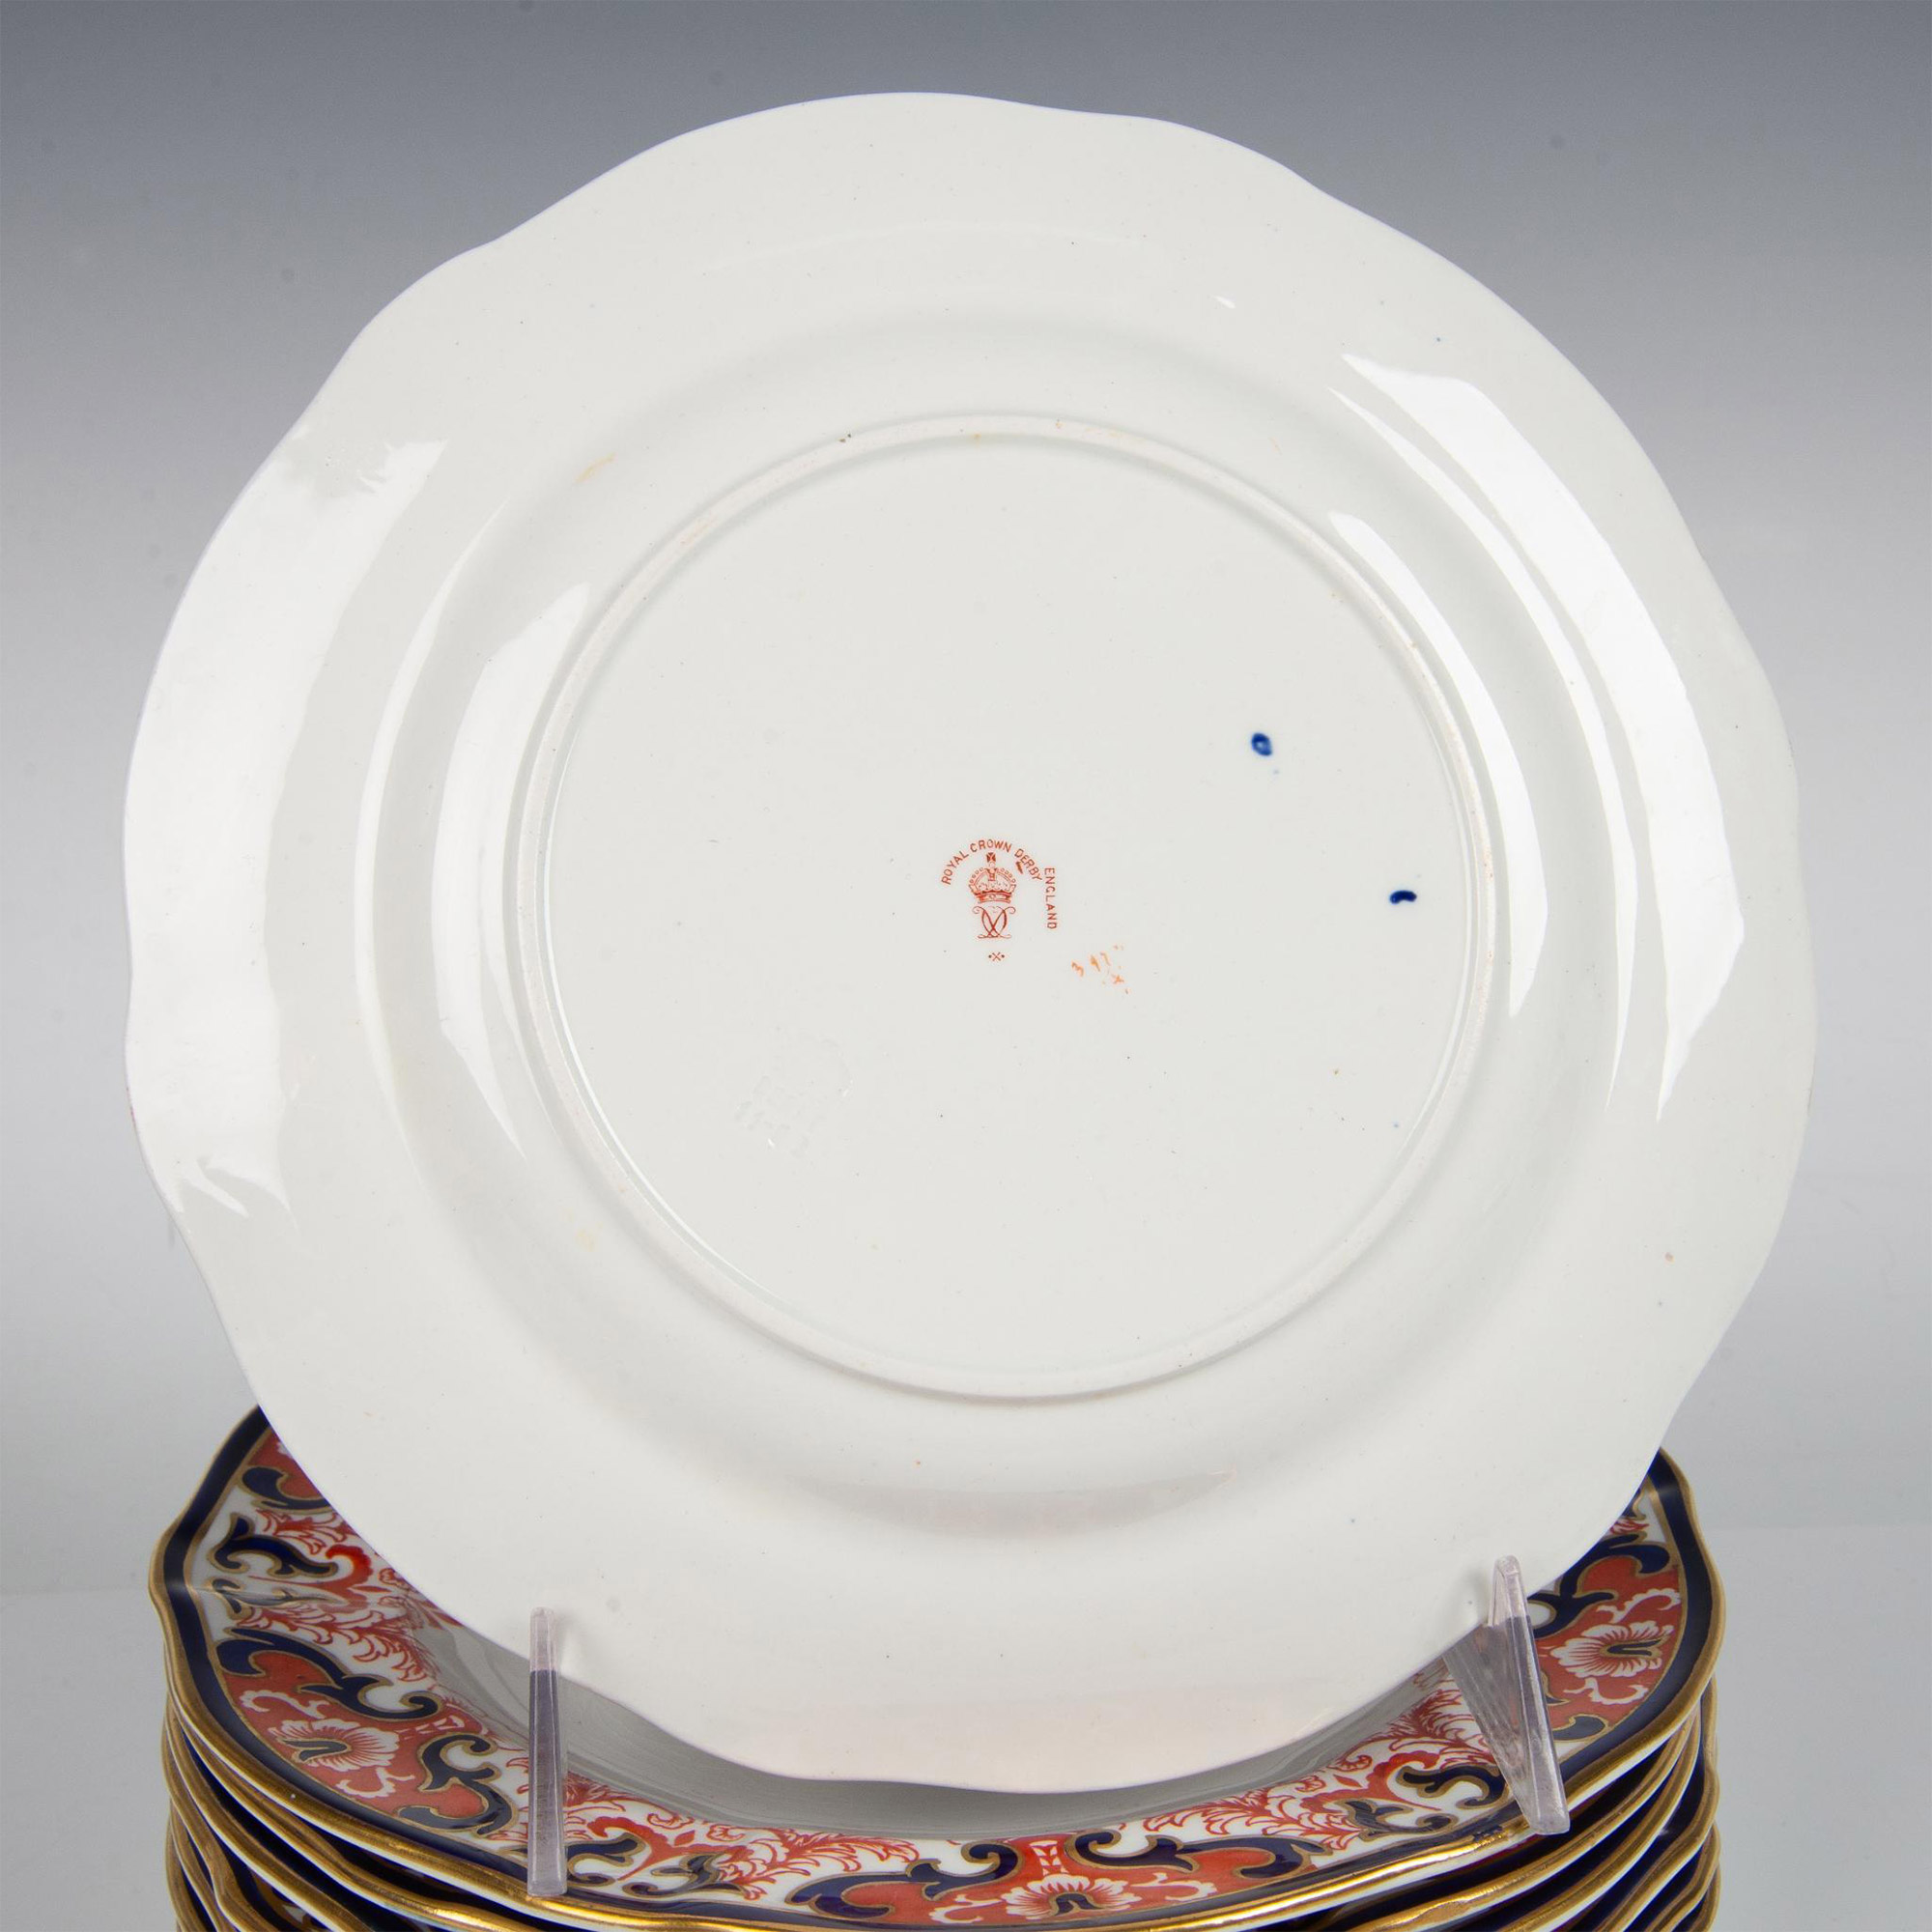 25pc Royal Crown Derby Porcelain Dinner Ware, Imari - Image 11 of 14